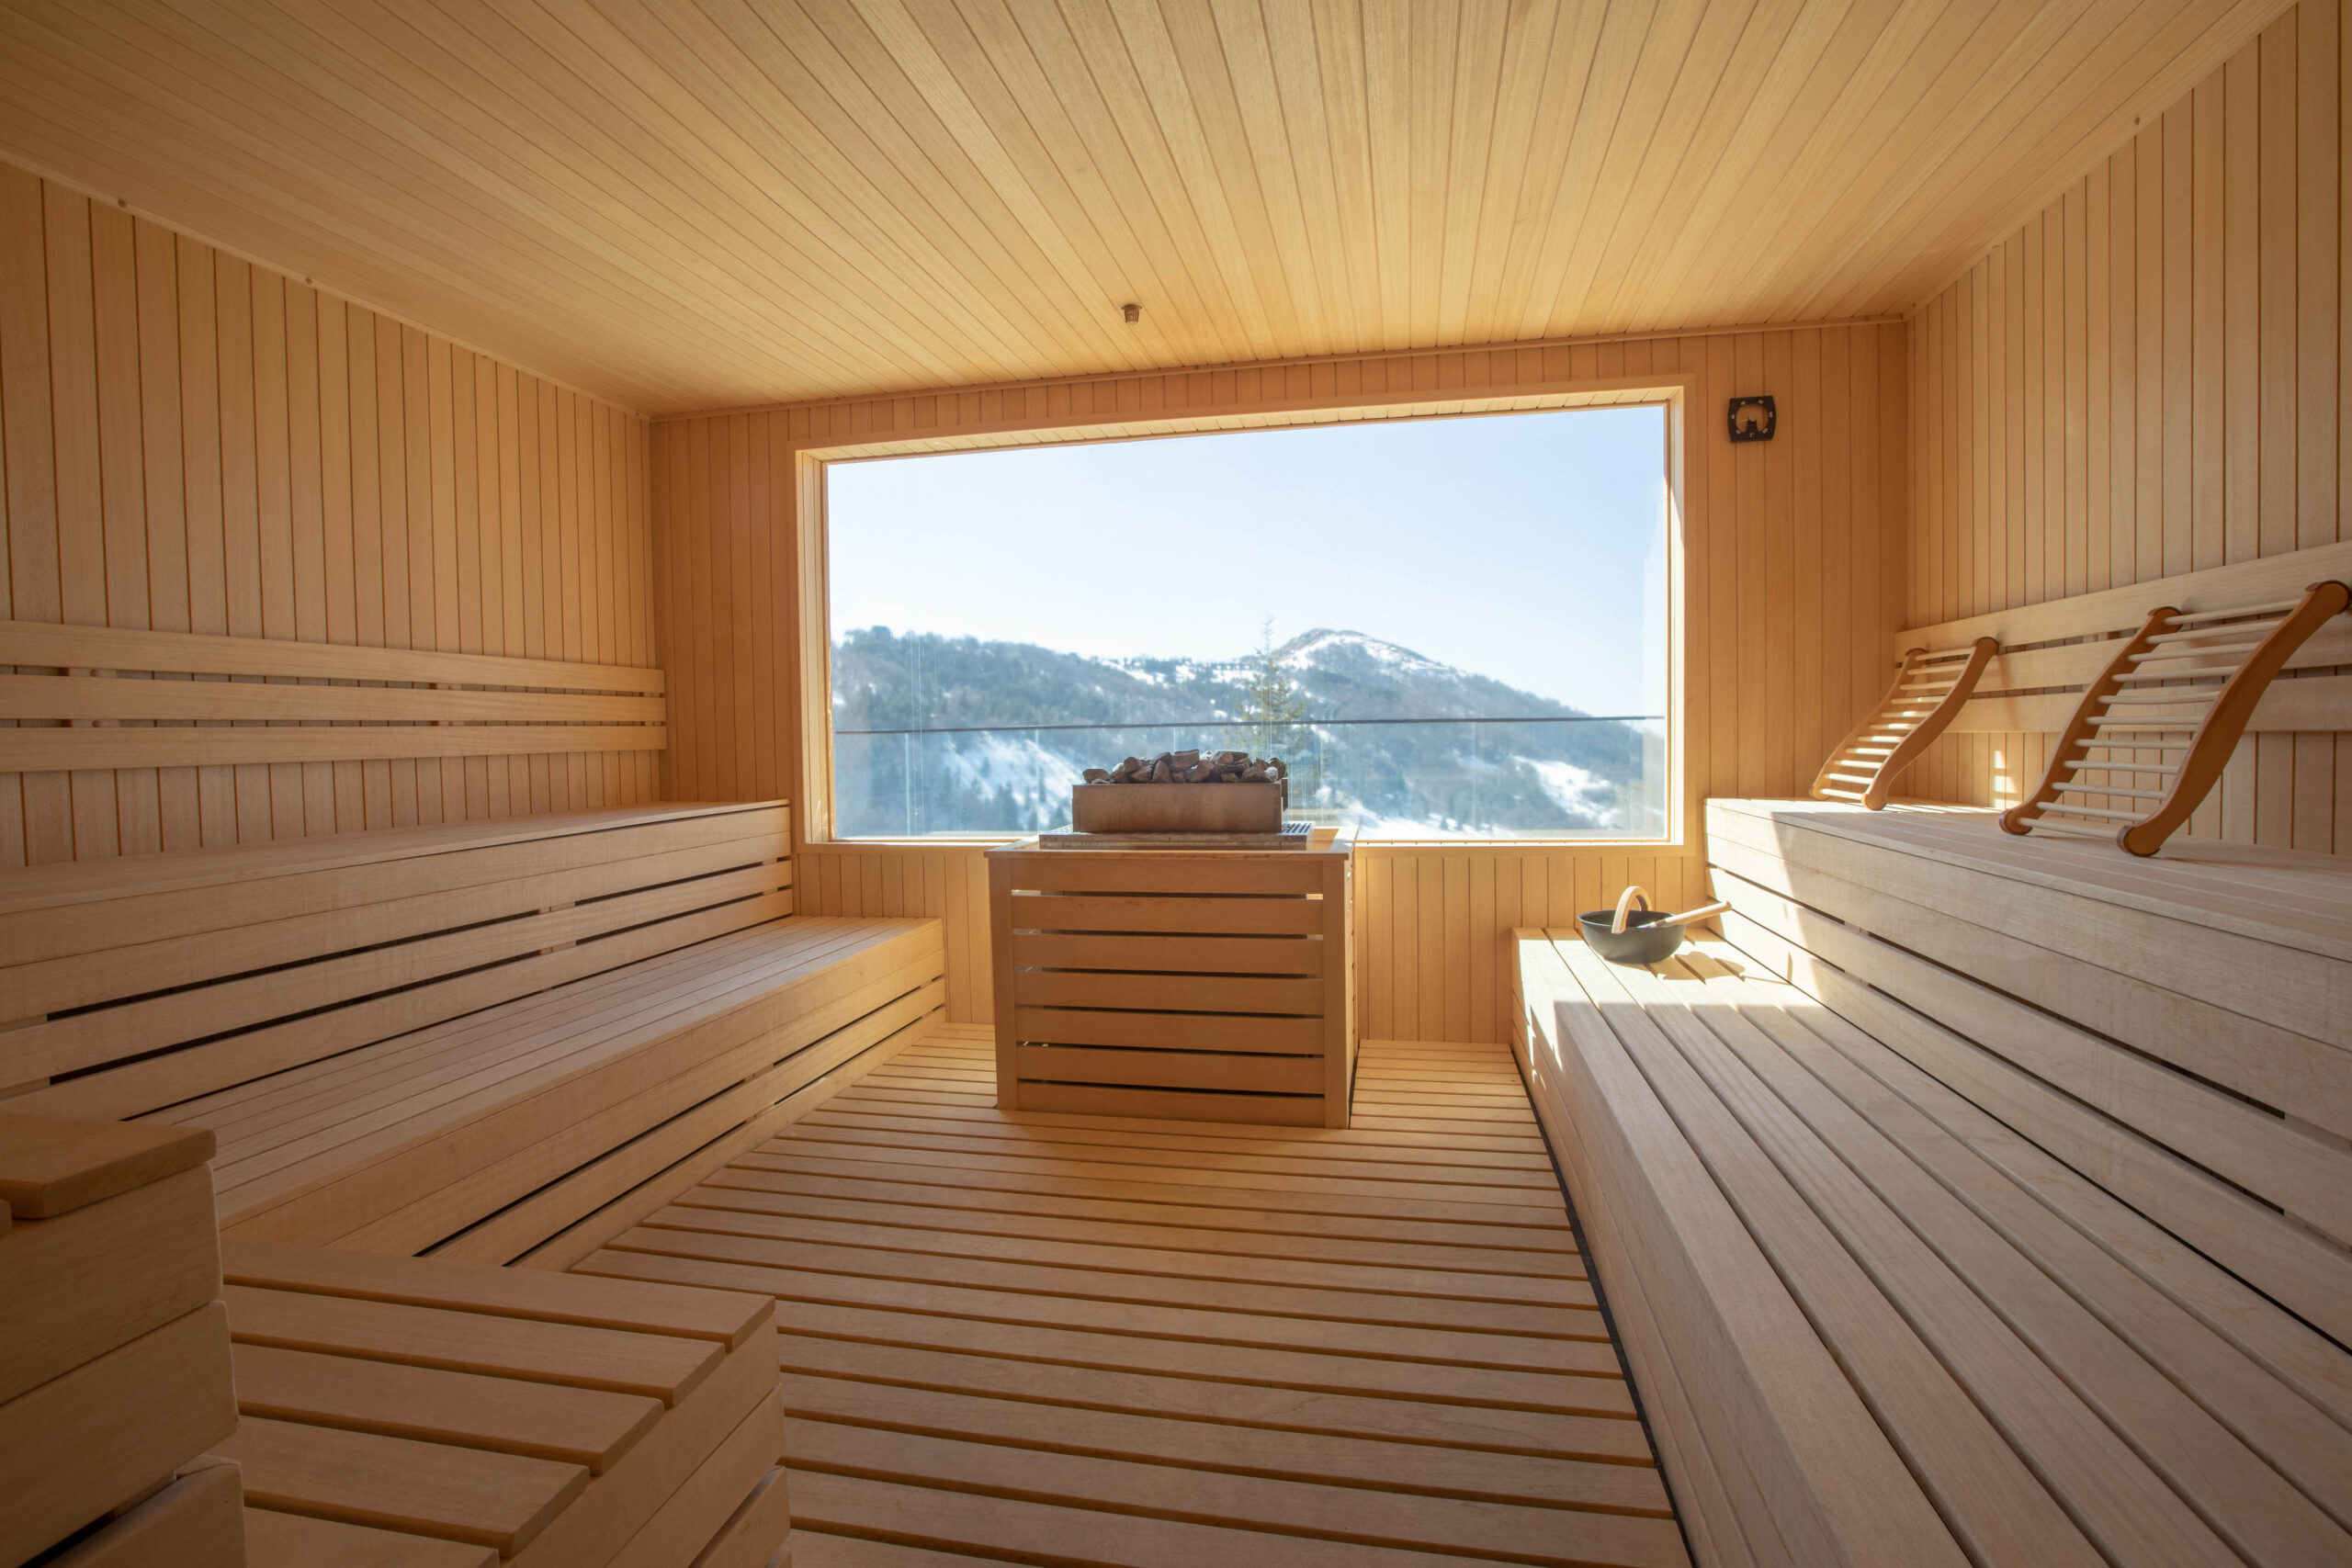 Empty wooden sauna room with traditional sauna accessories